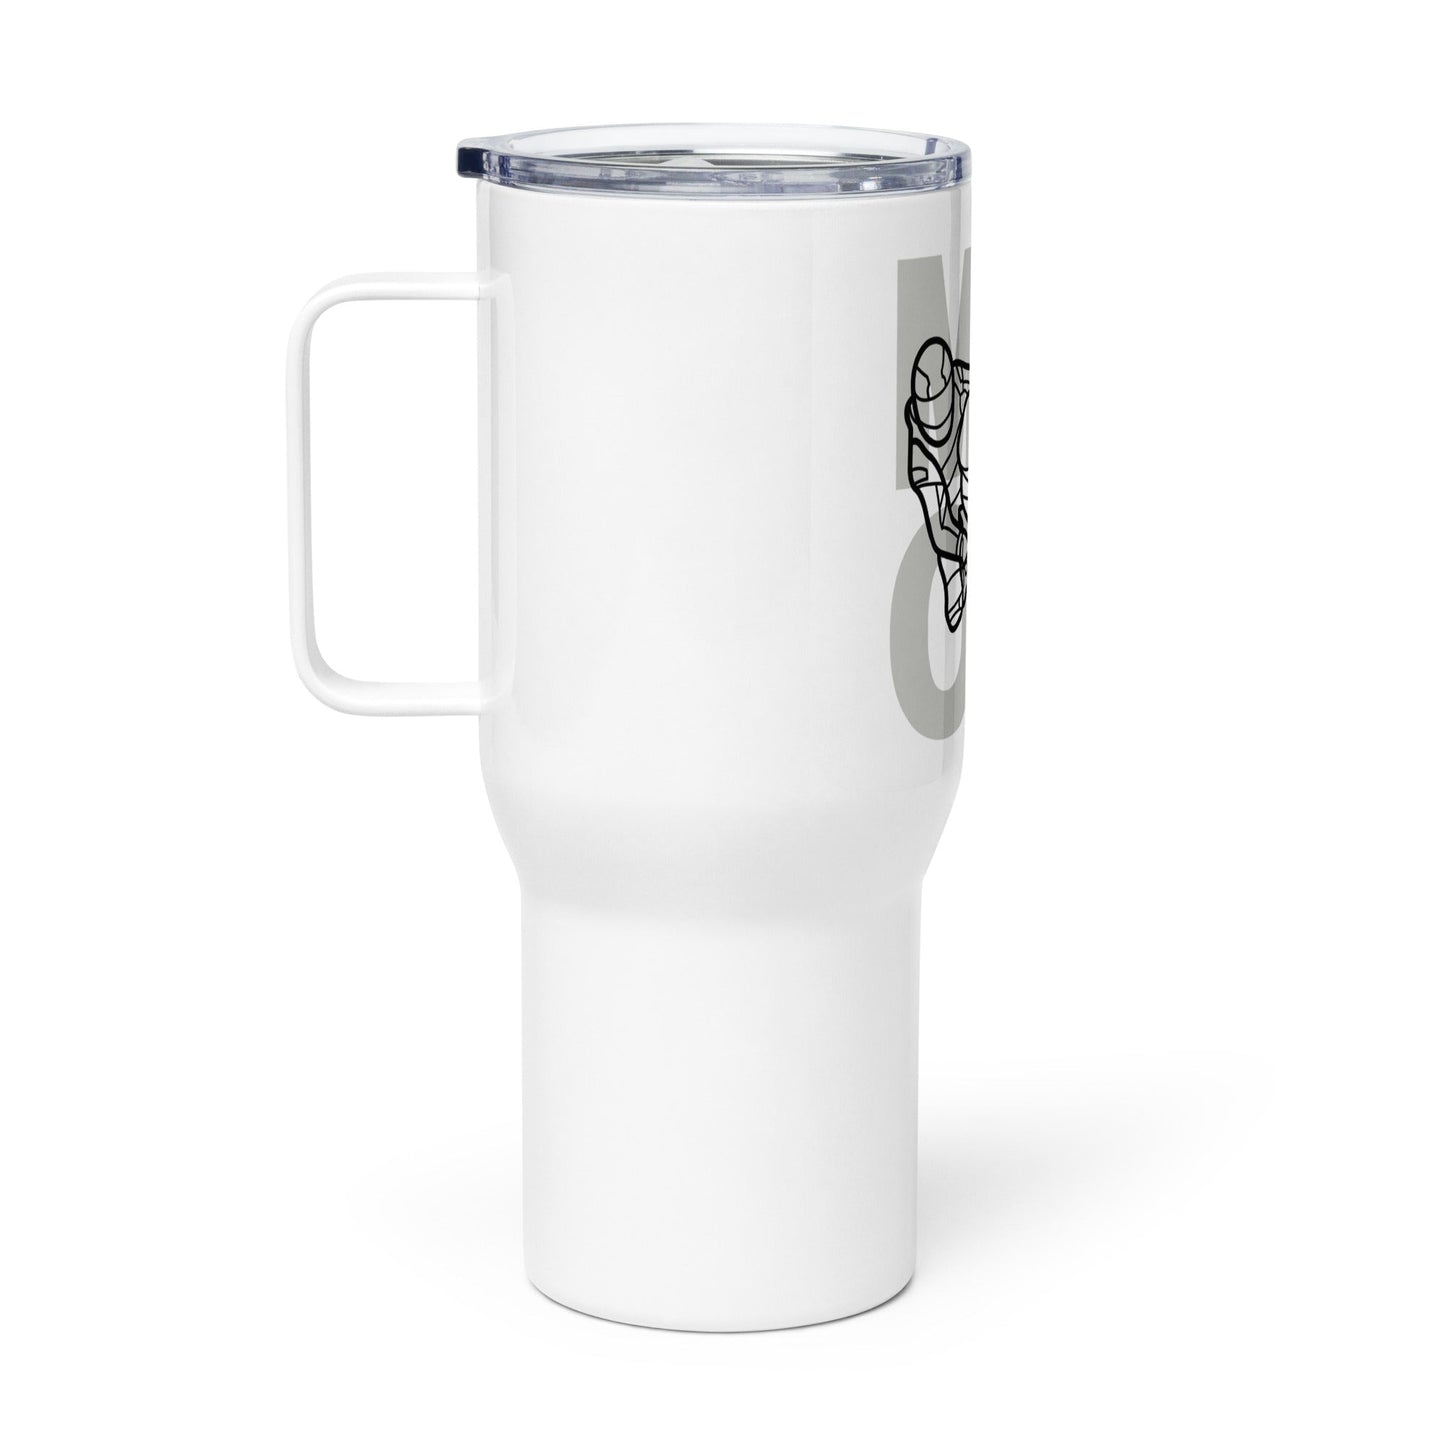 Travel mug with a handle - Mood - The Vandi Company